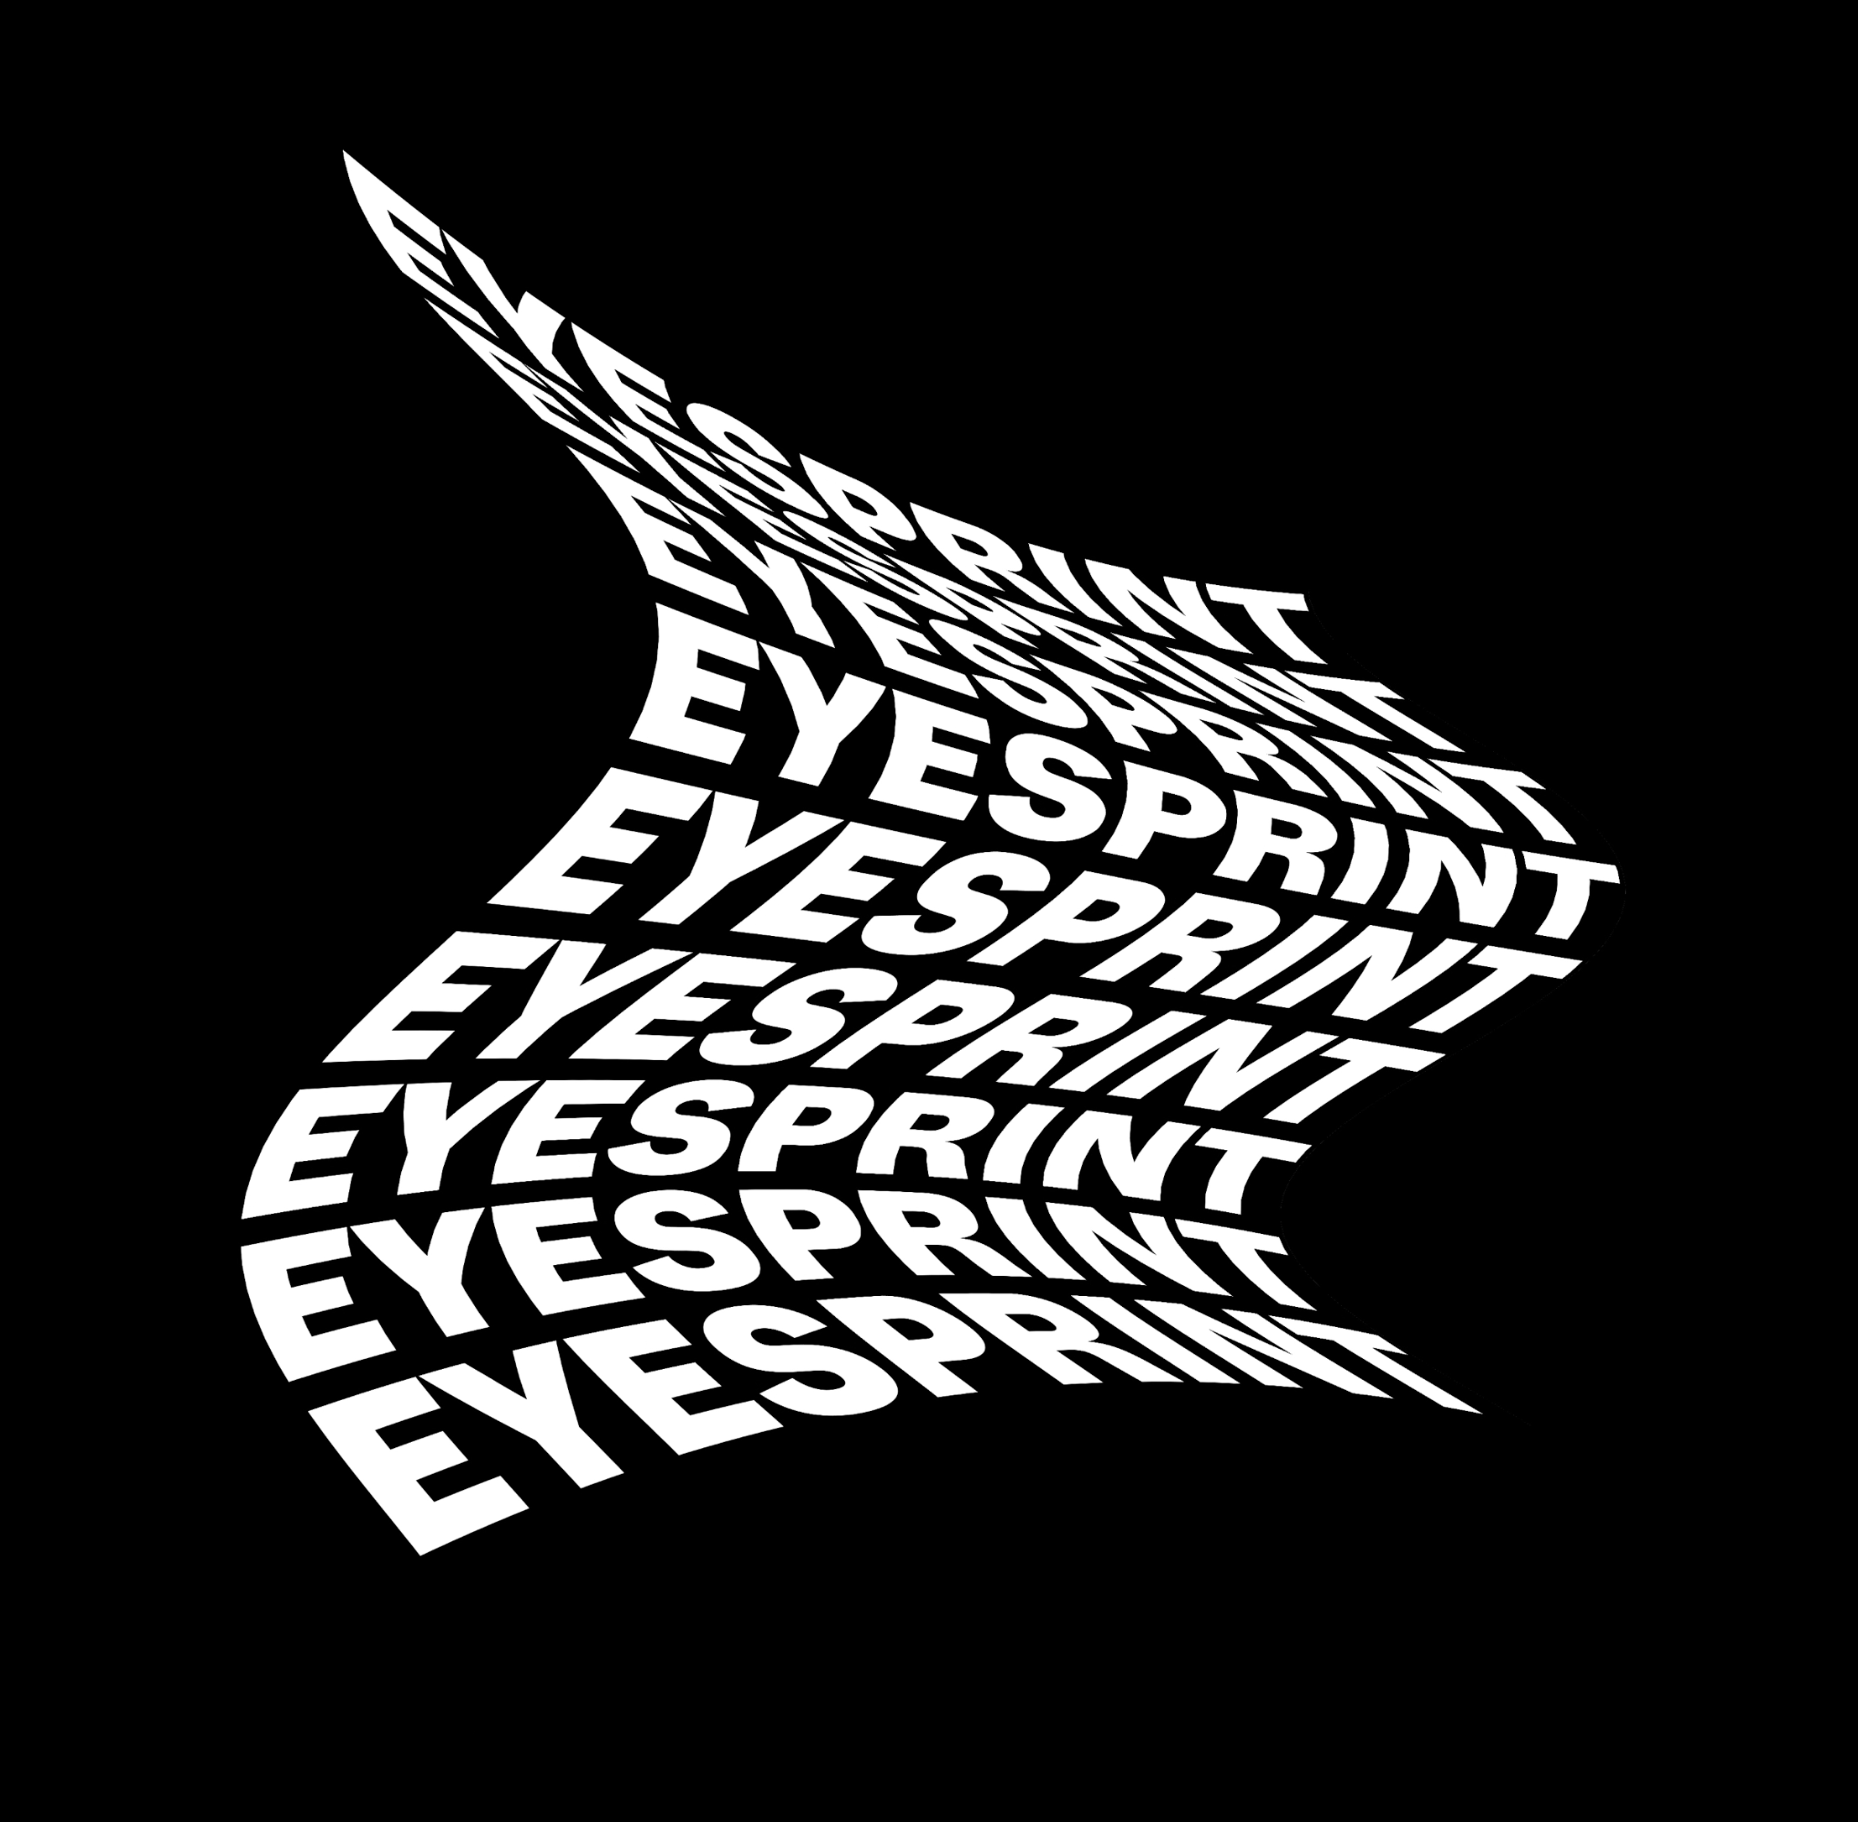 eyesprint logo white on black background